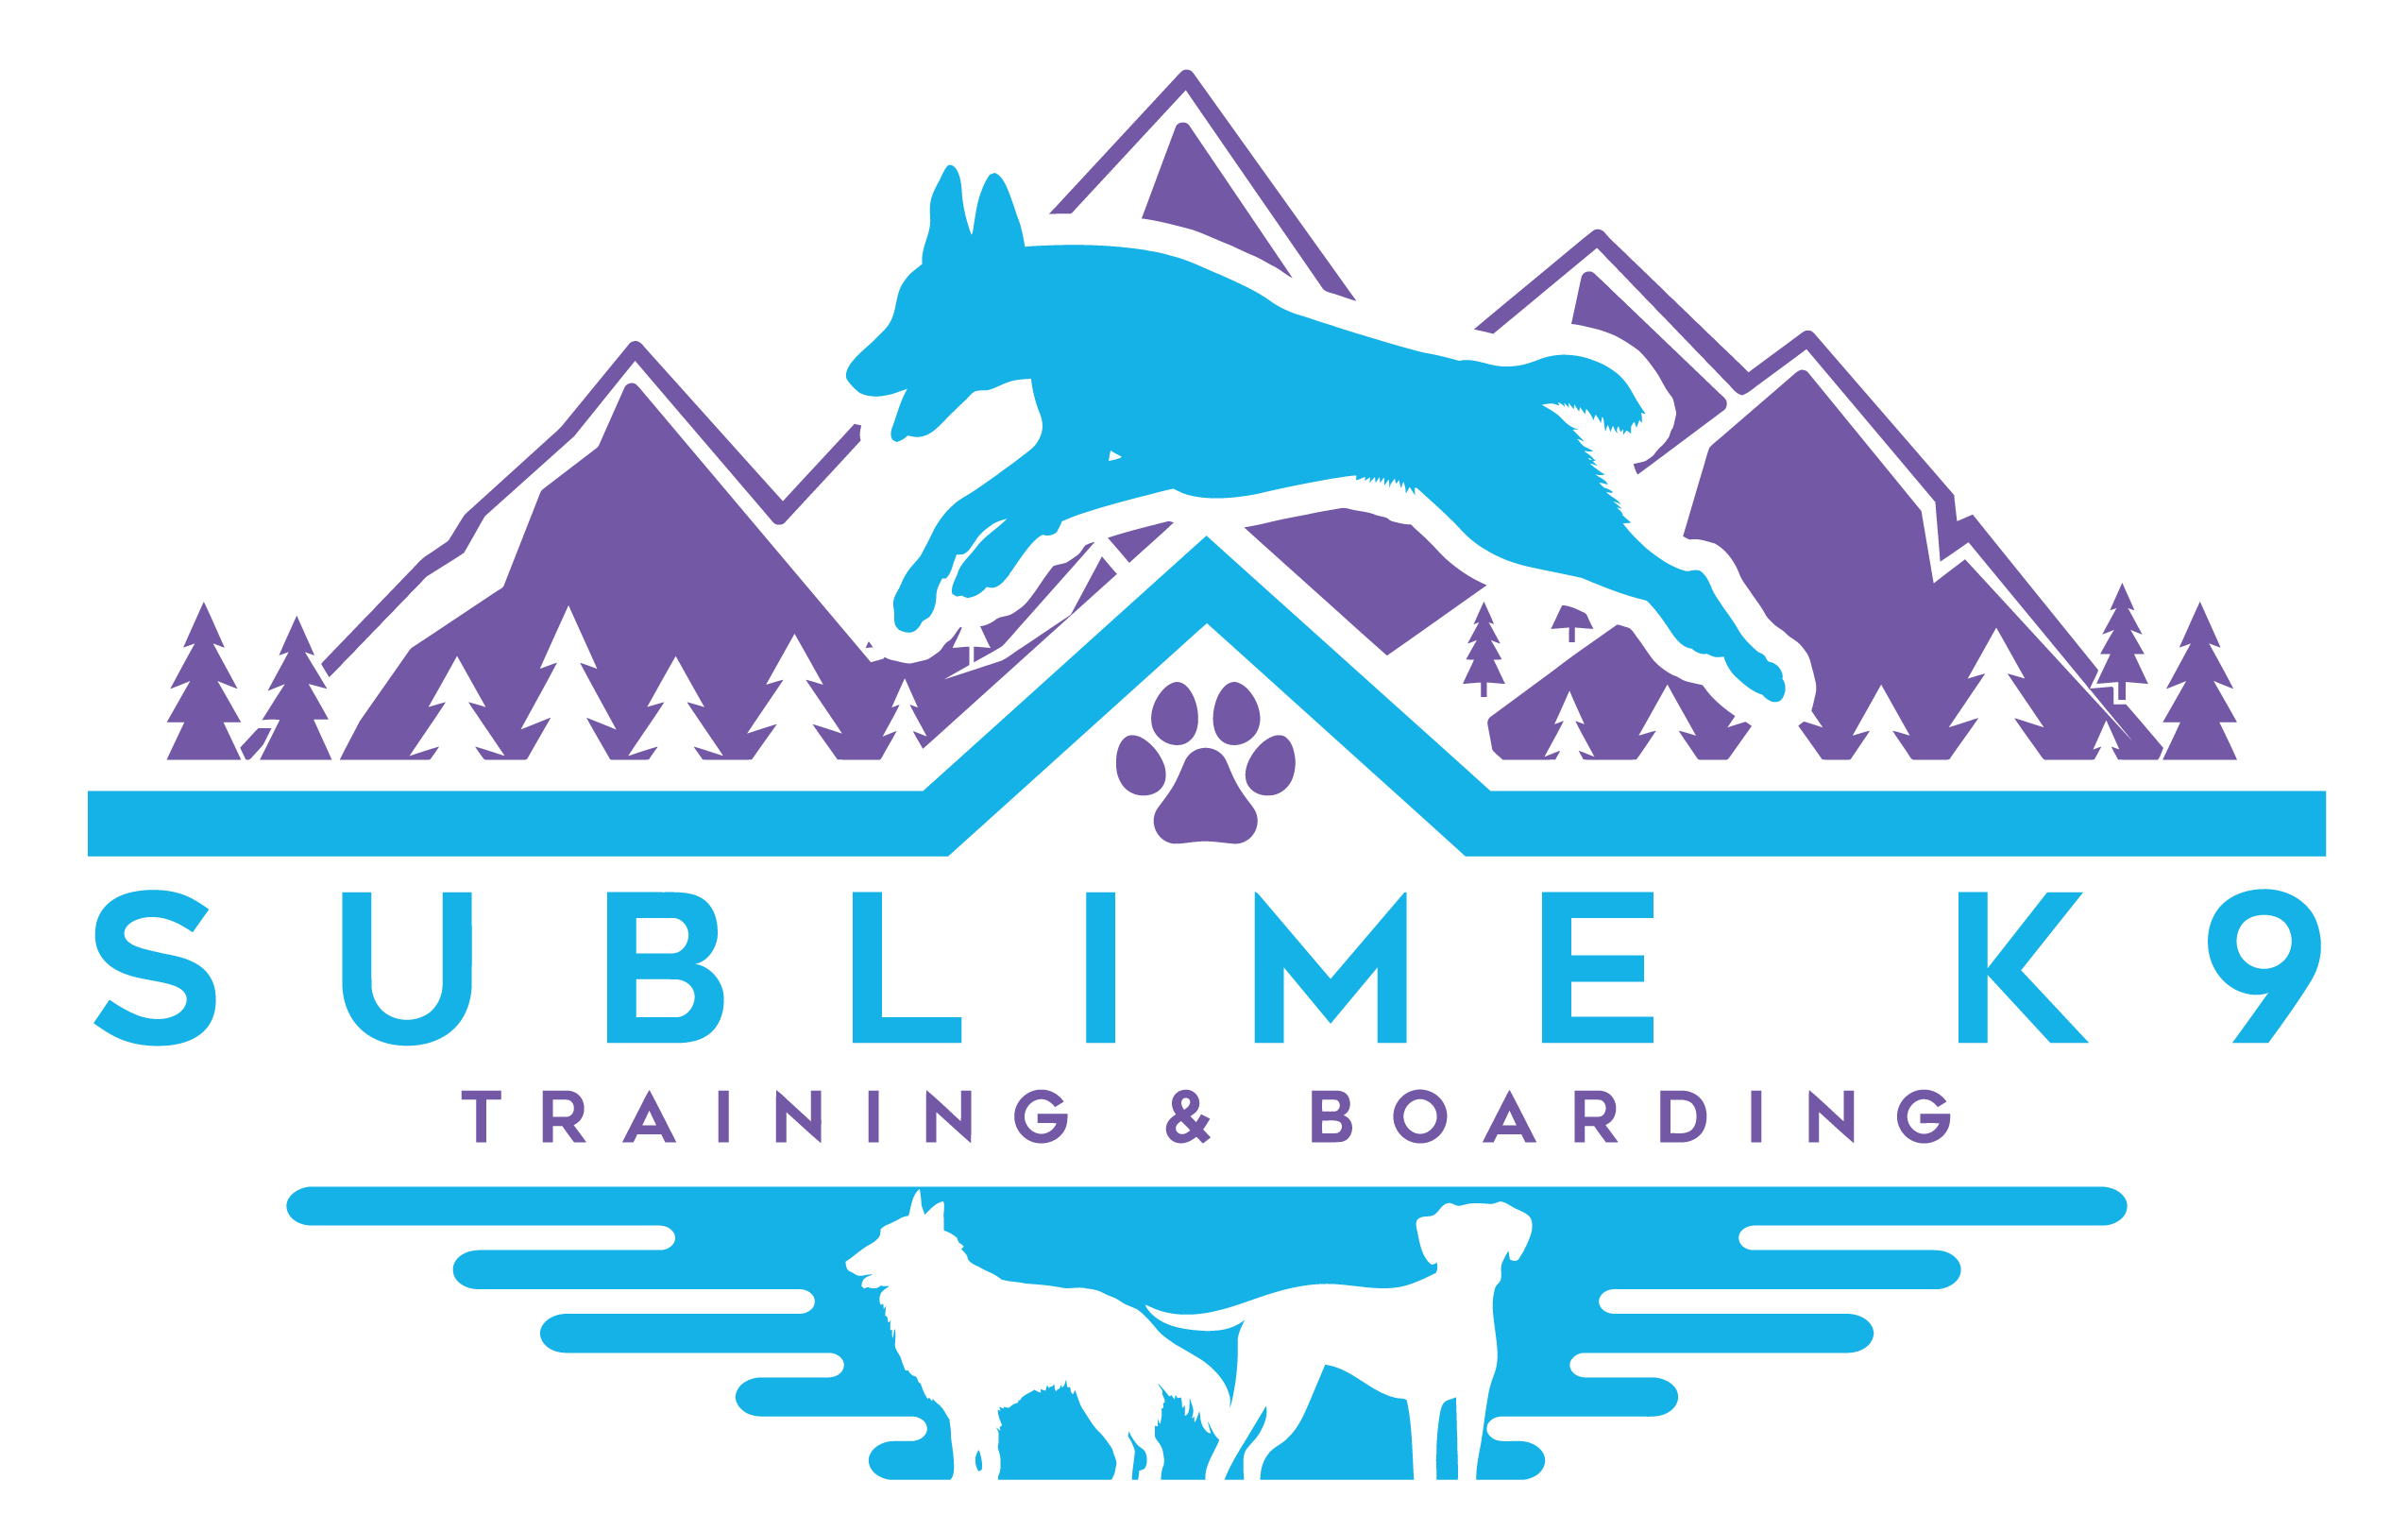 Sublime K9 Training & Boarding